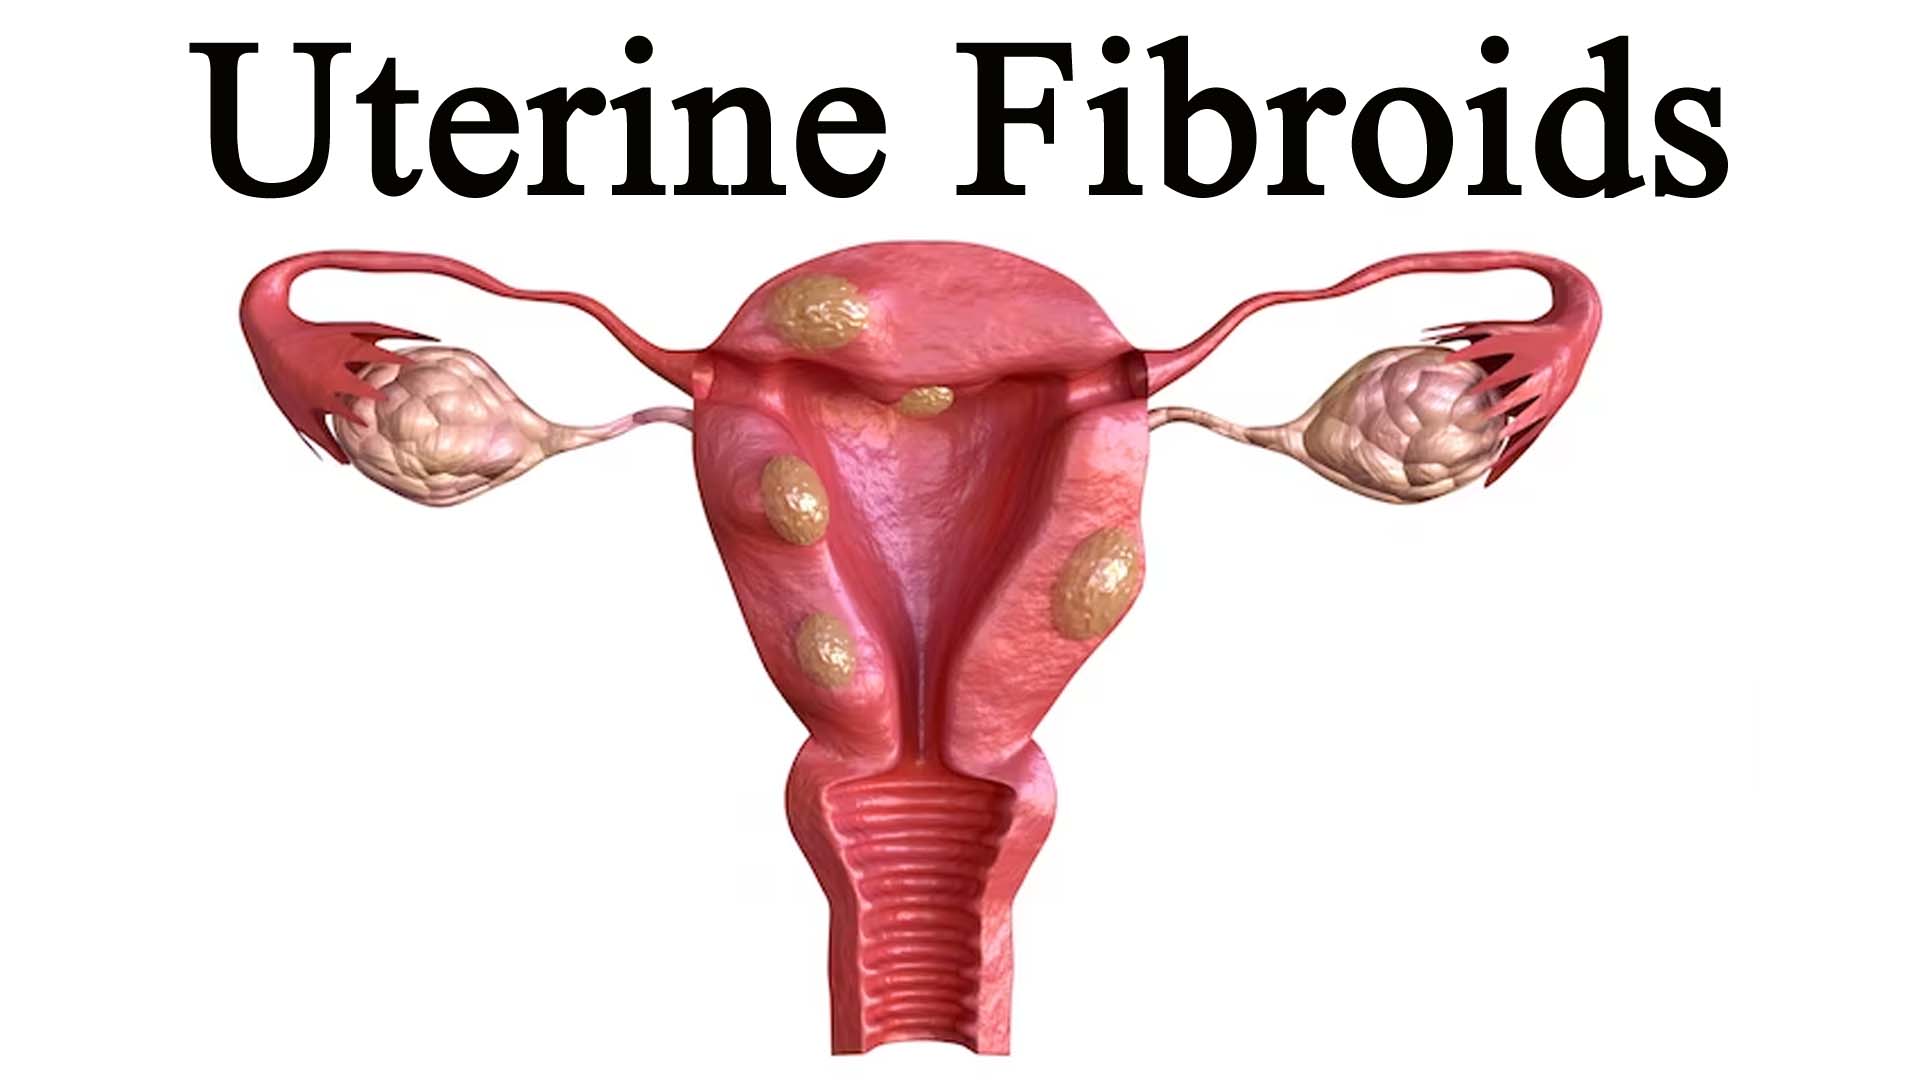 Causes of Uterine Fibroids